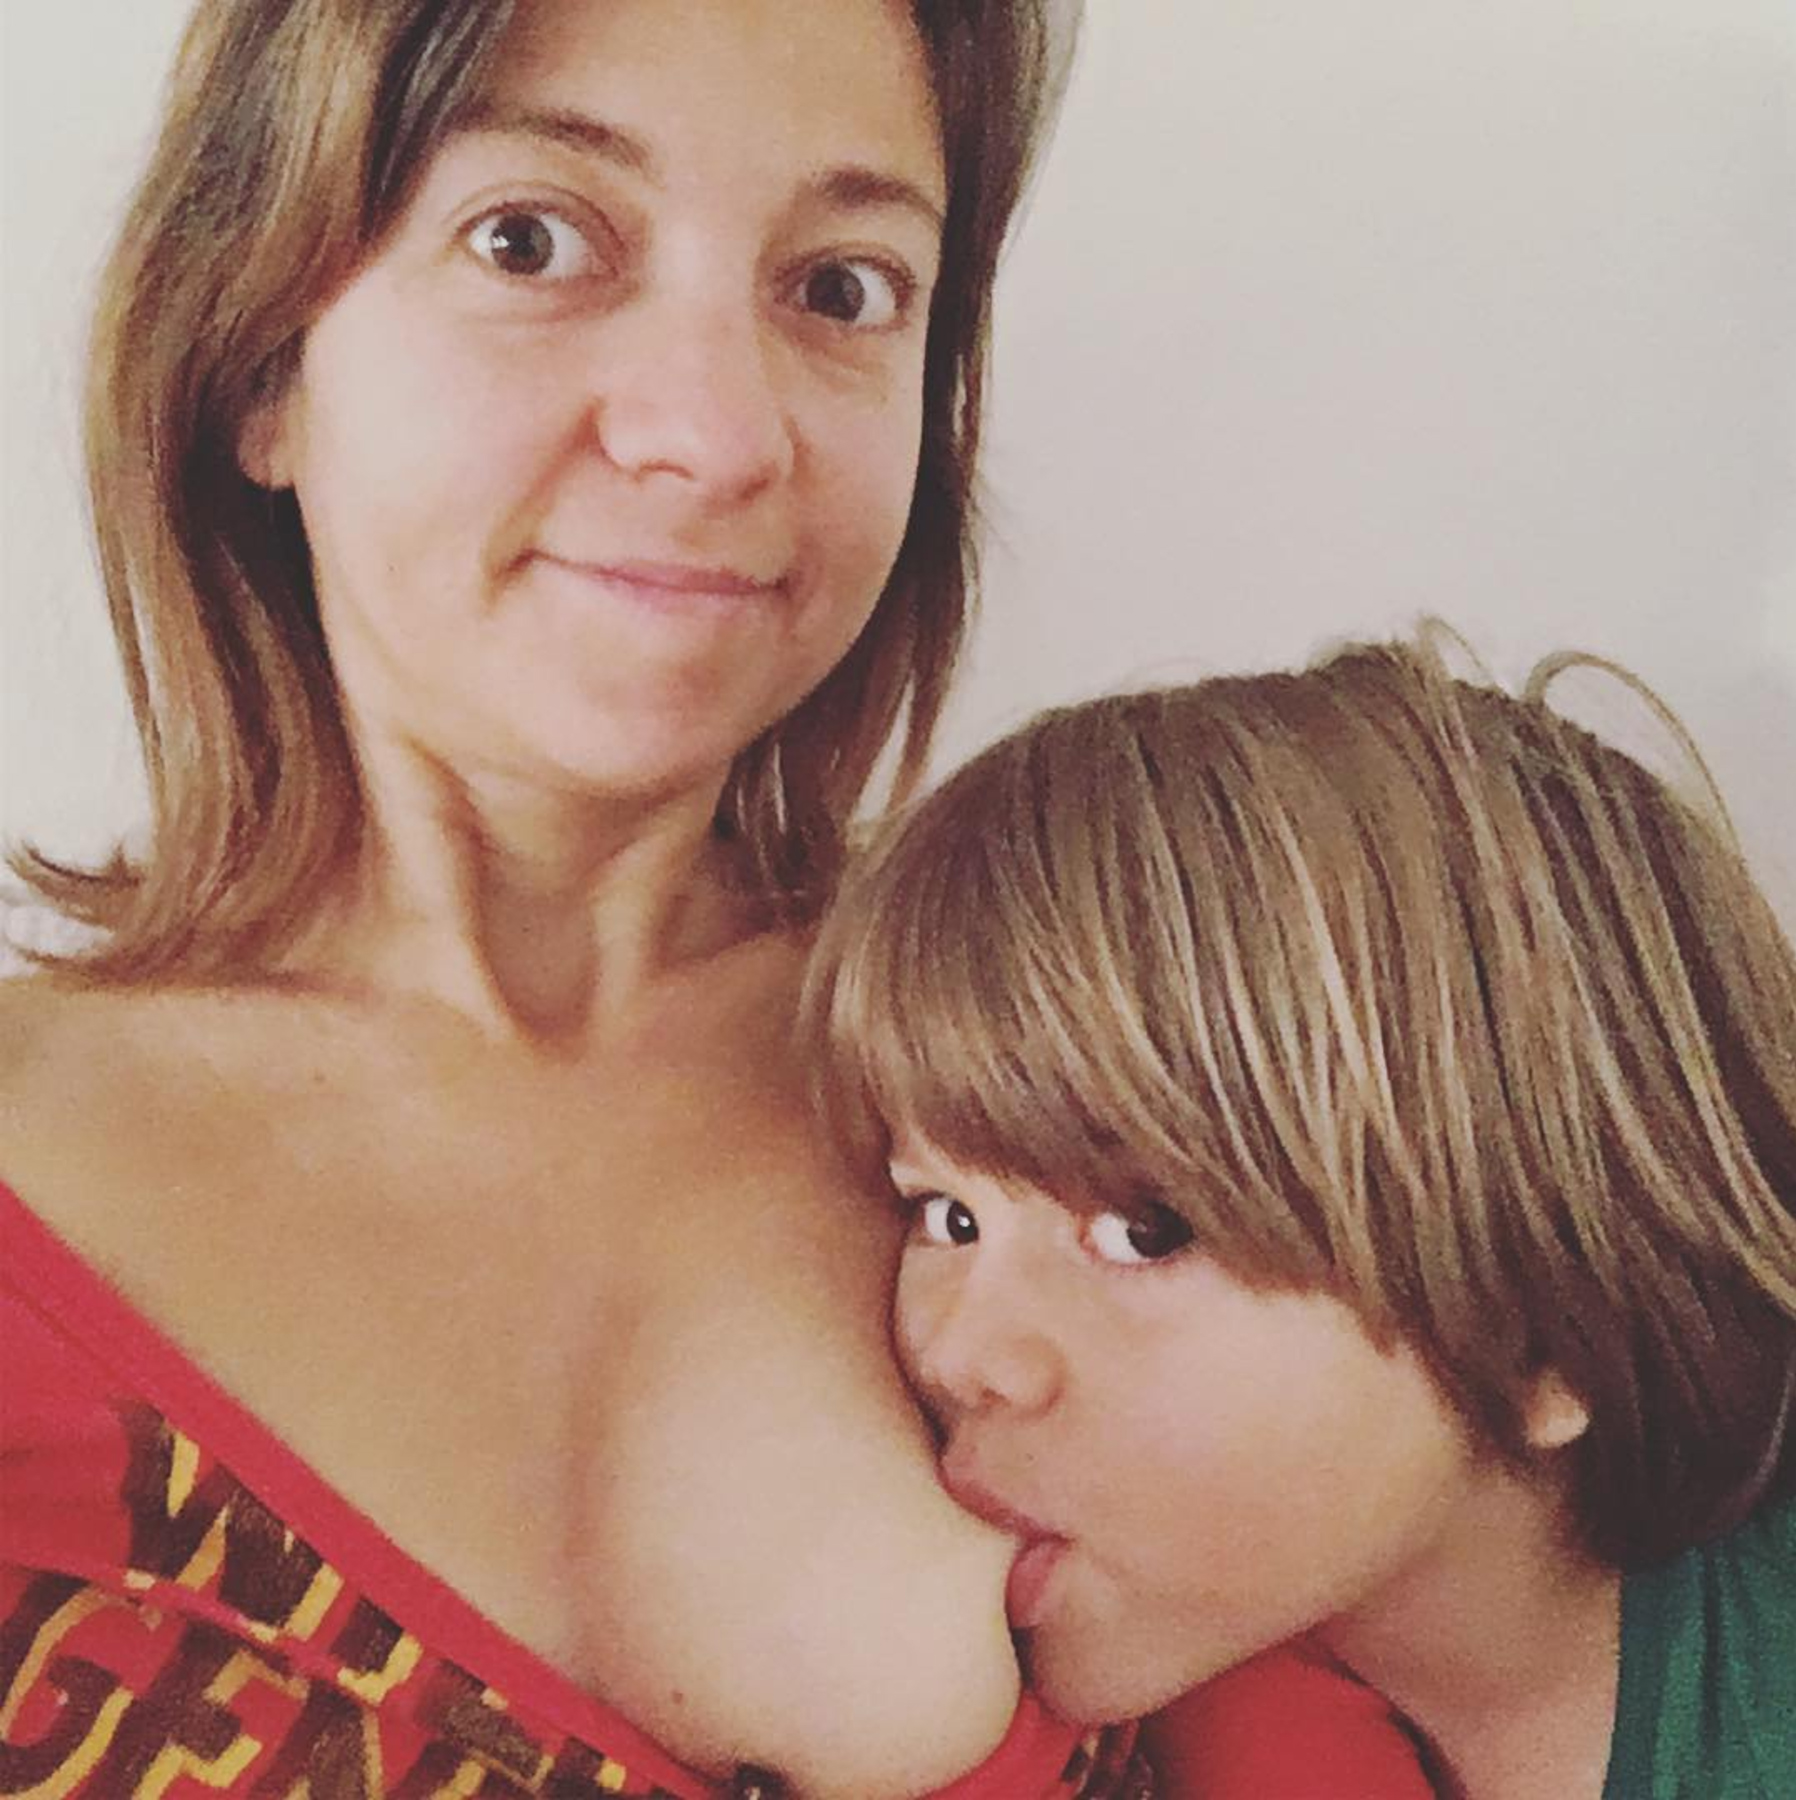 brandon sensor add mom breastfeeding son porn photo